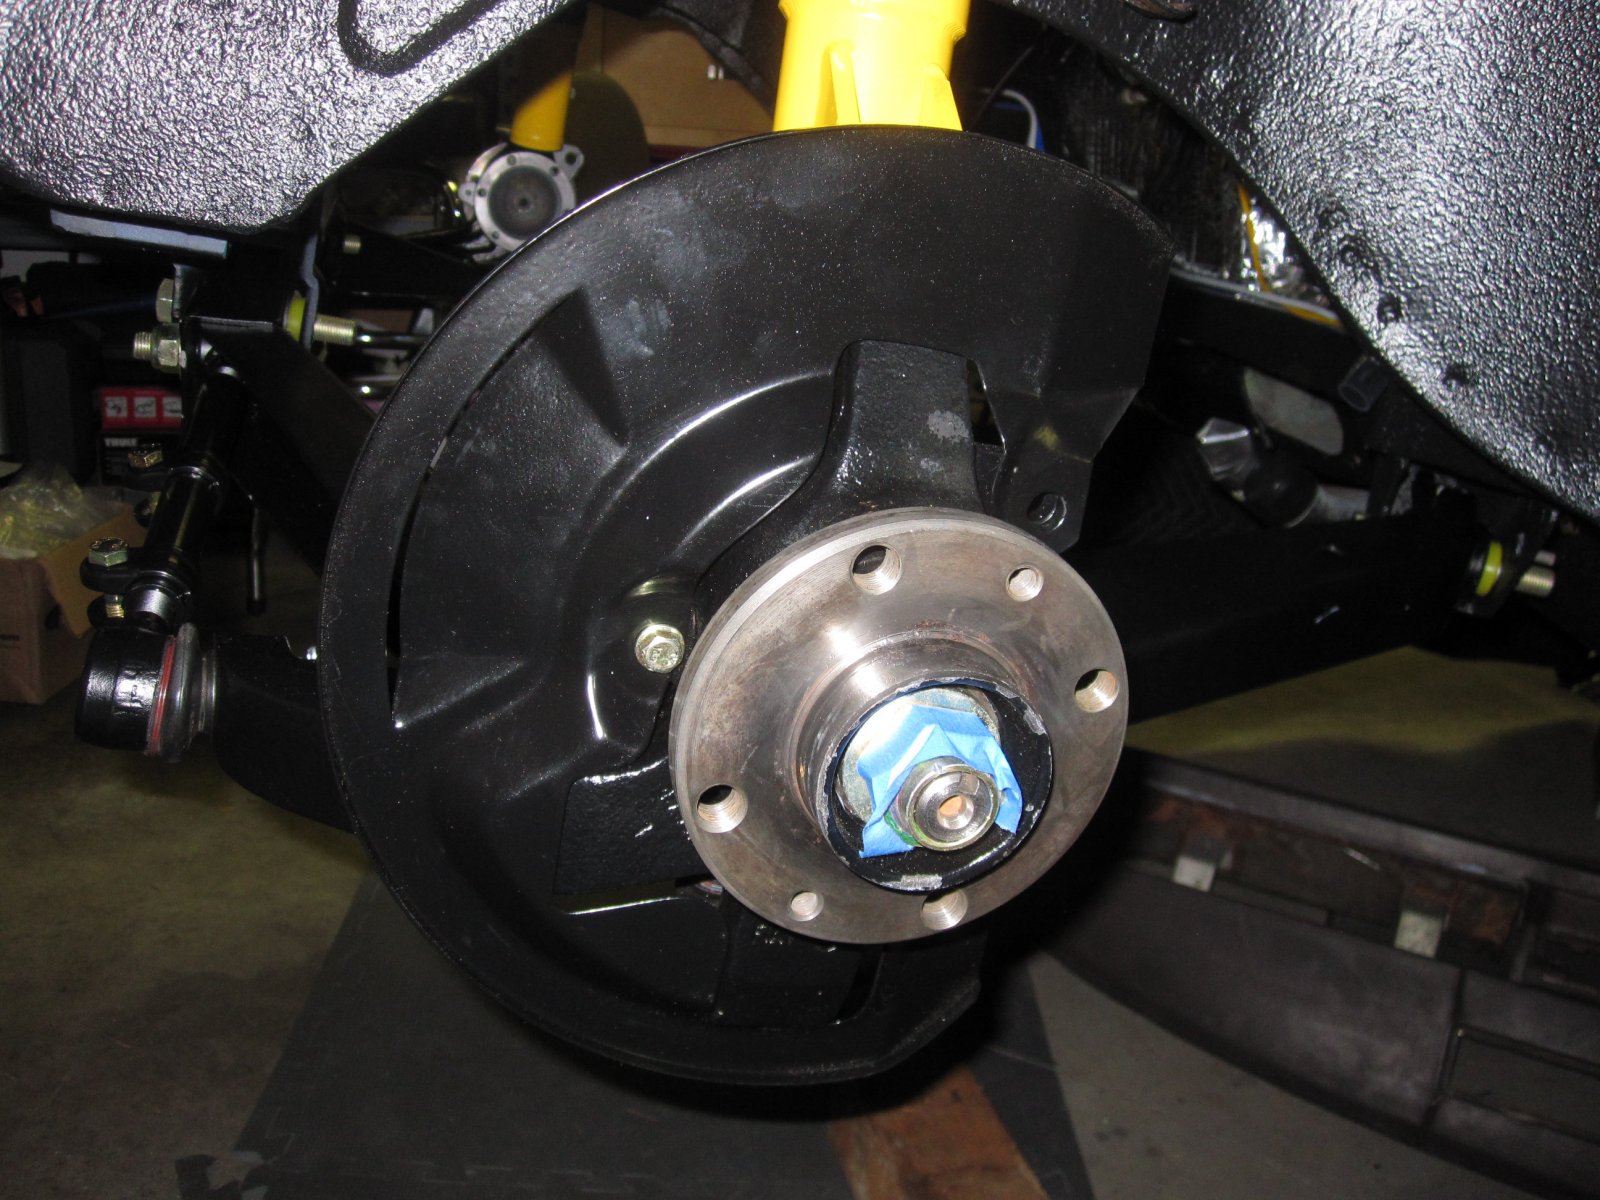 Rear suspension and brakes 02.JPG